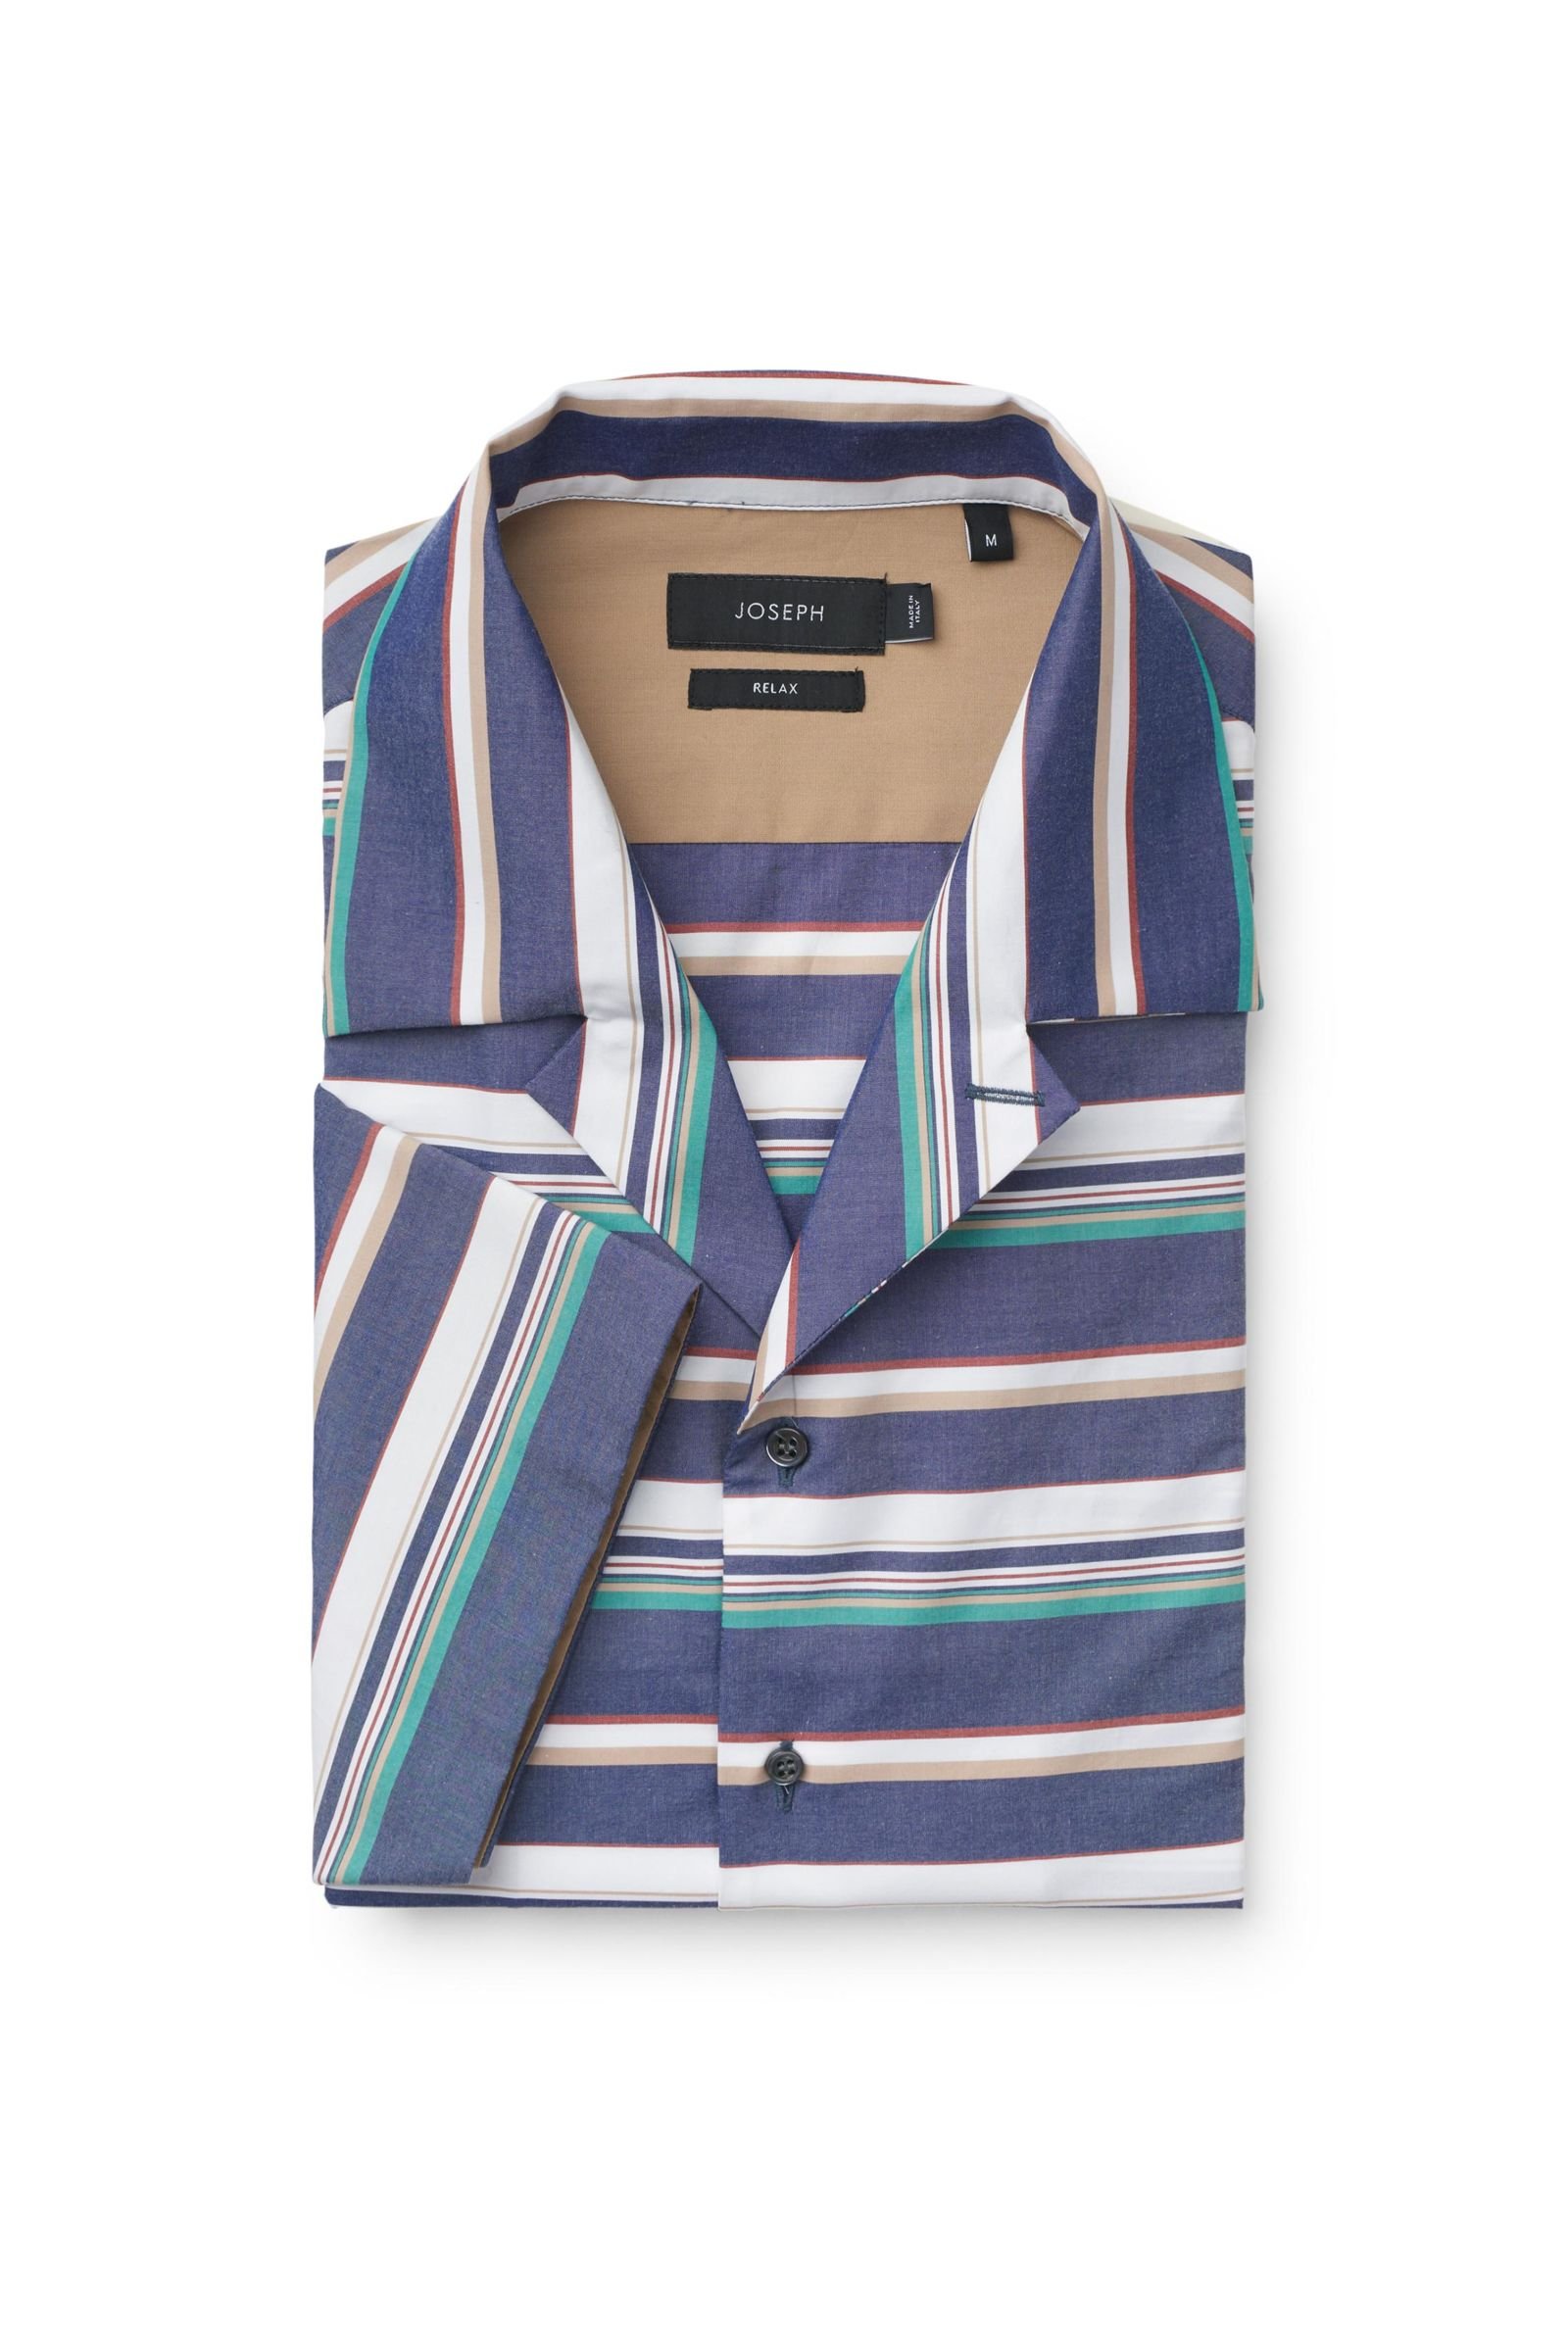 Short-sleeved shirt Cuban collar grey-blue/white striped